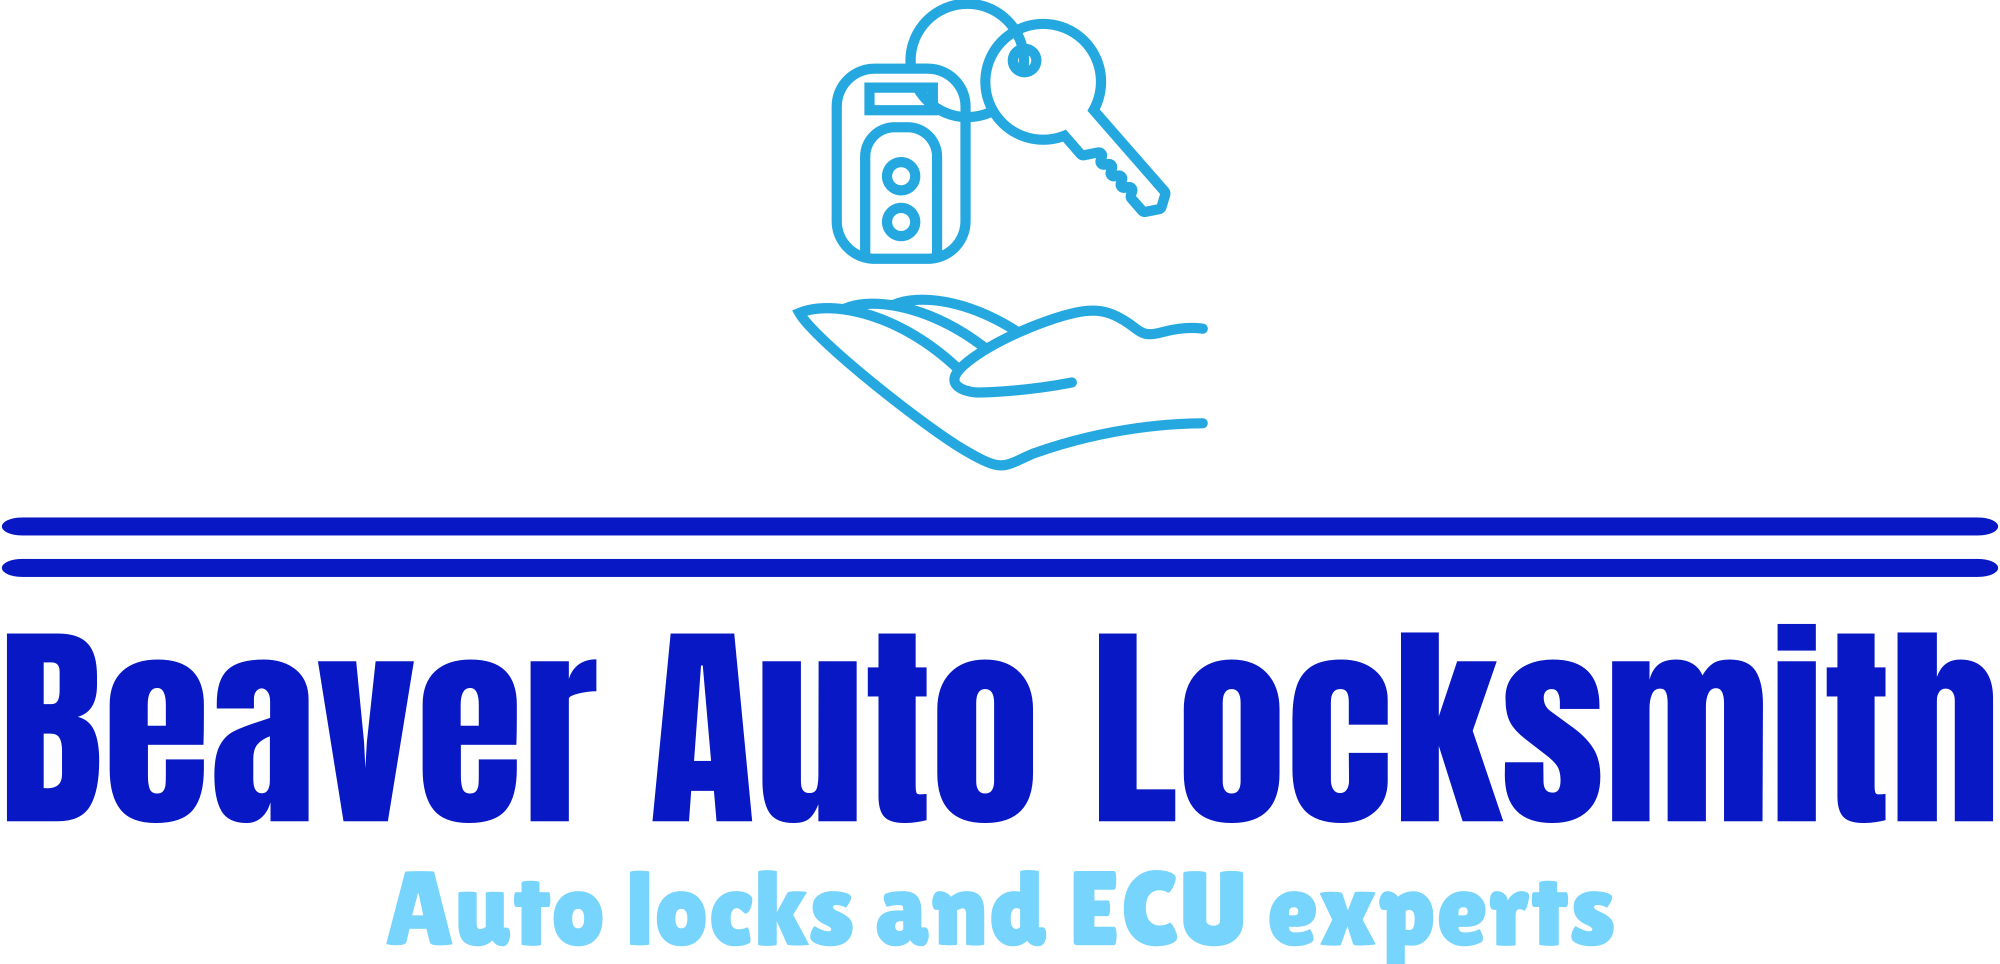 Beaver Auto Locksmith. Auto keys and ECU/SRS repairing